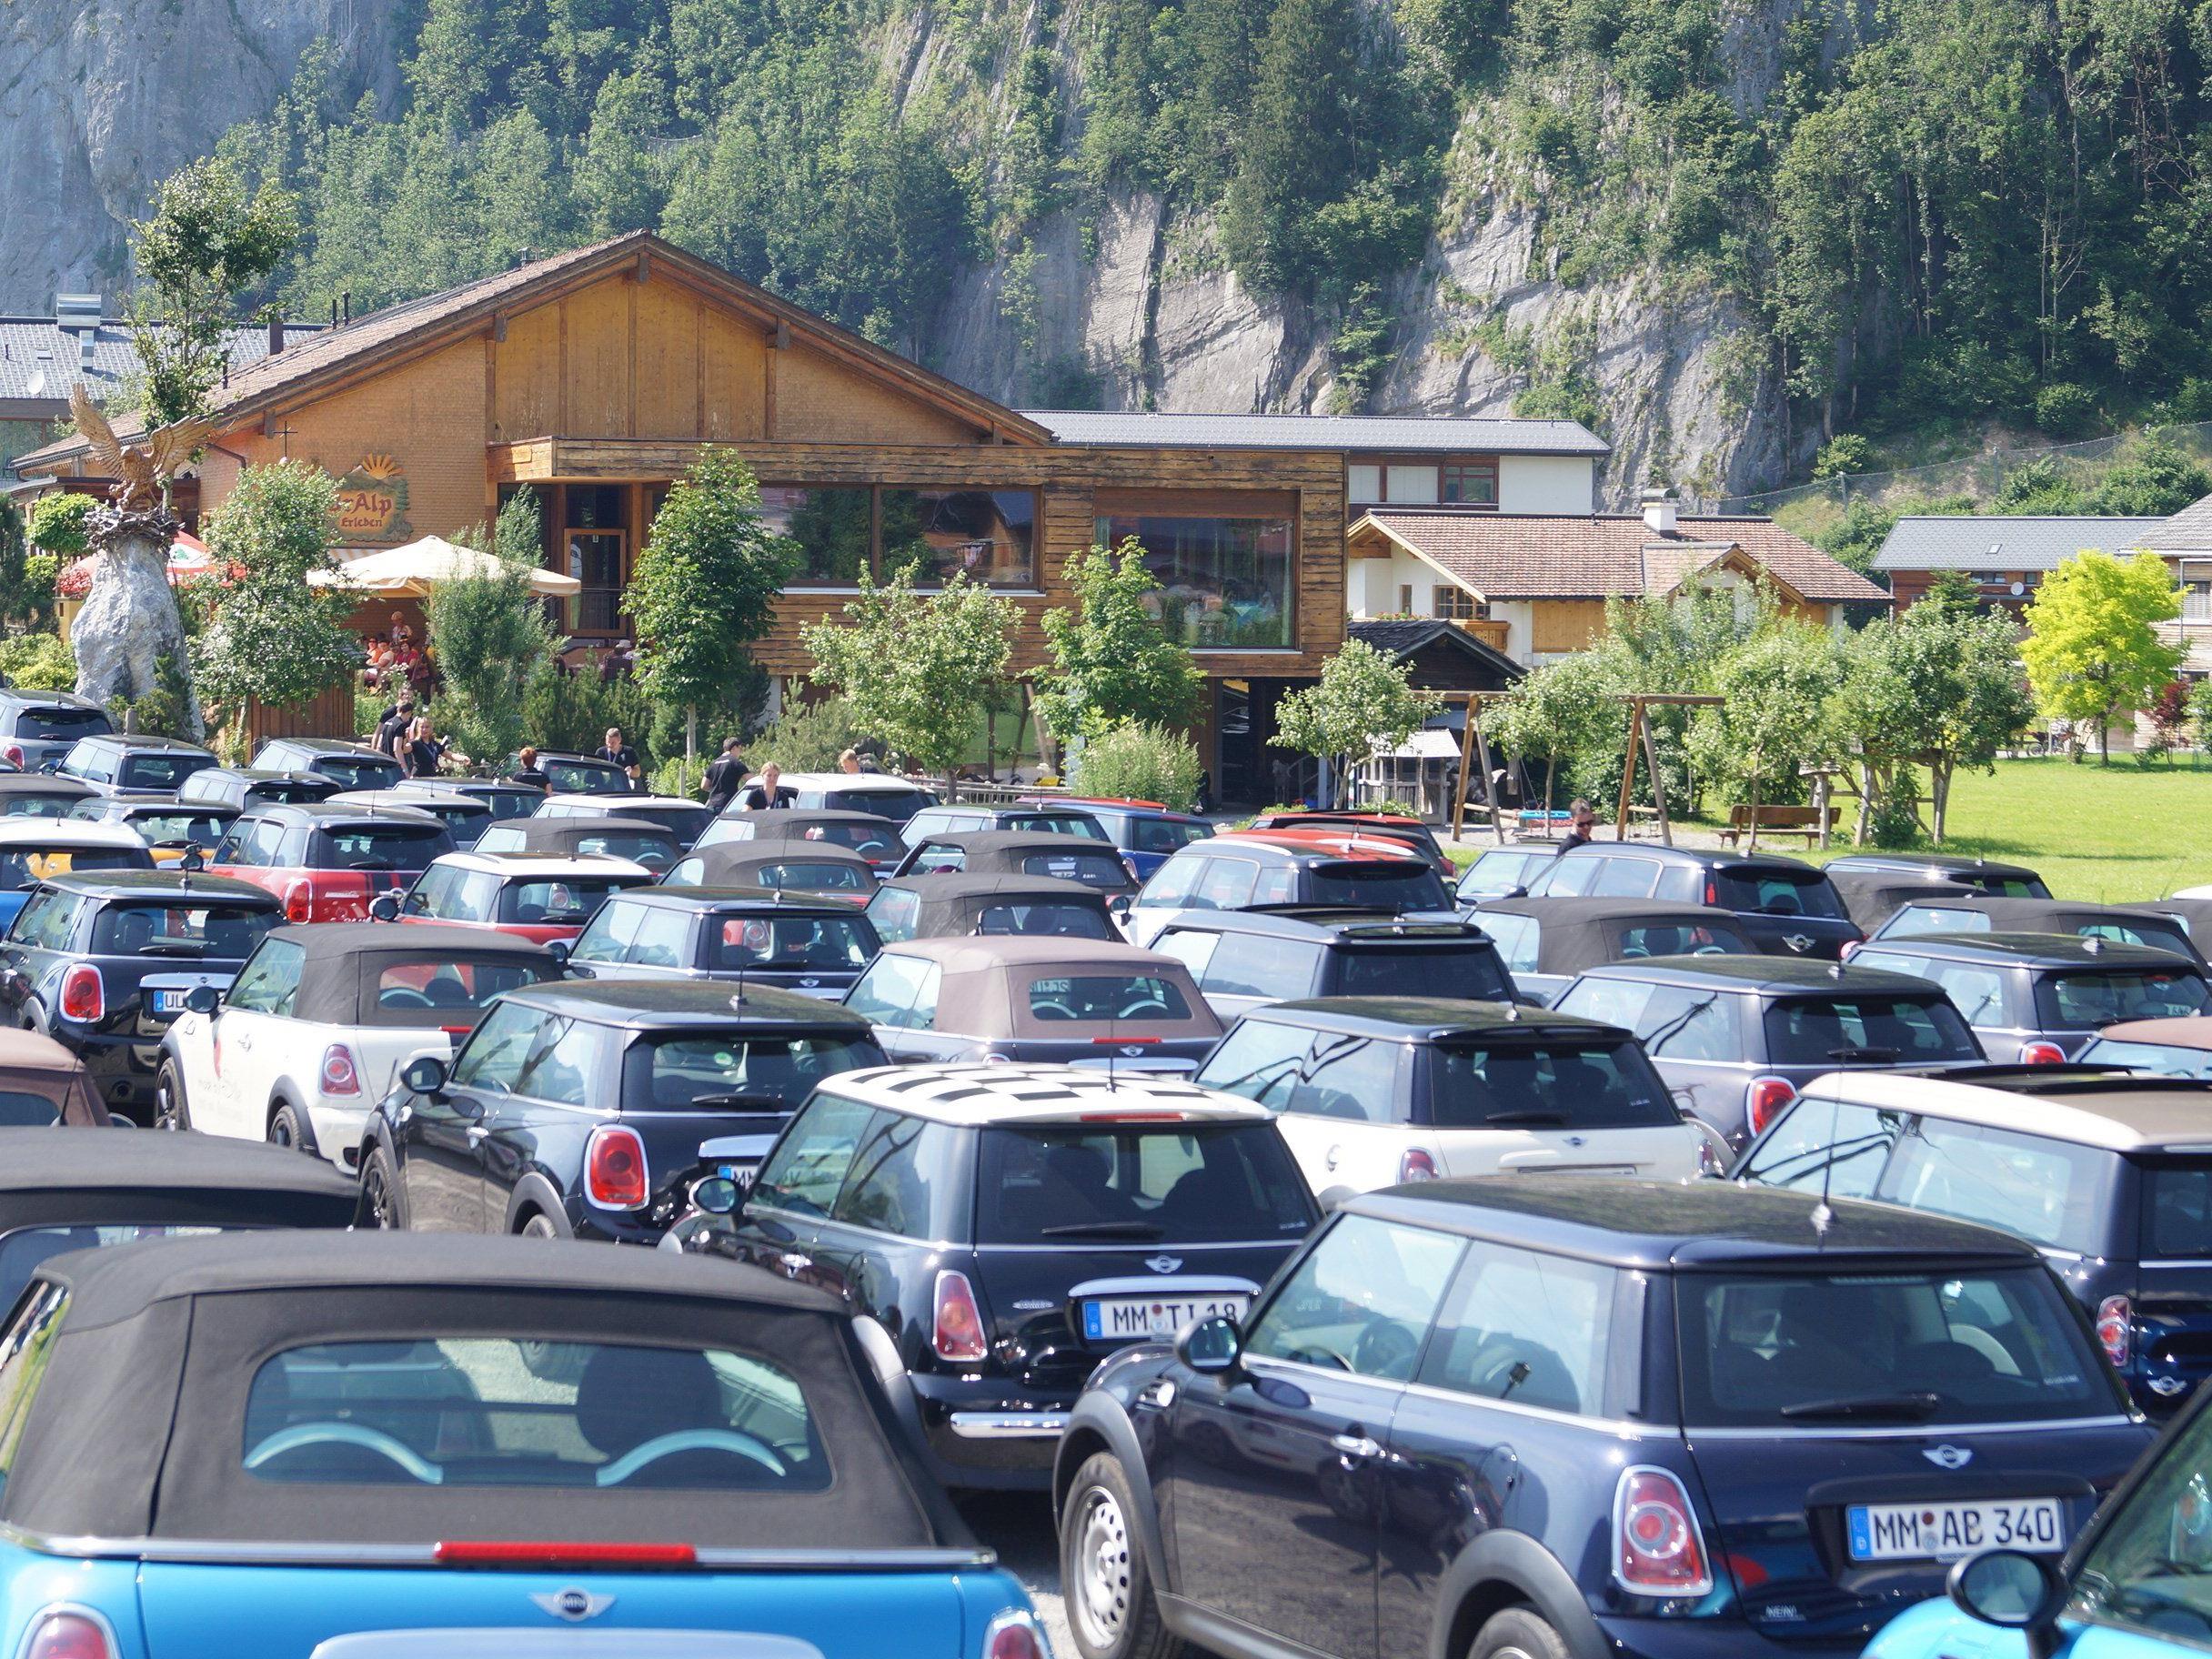 150 Mini Cooper füllen den Parkplatz bei der Ur-Alp